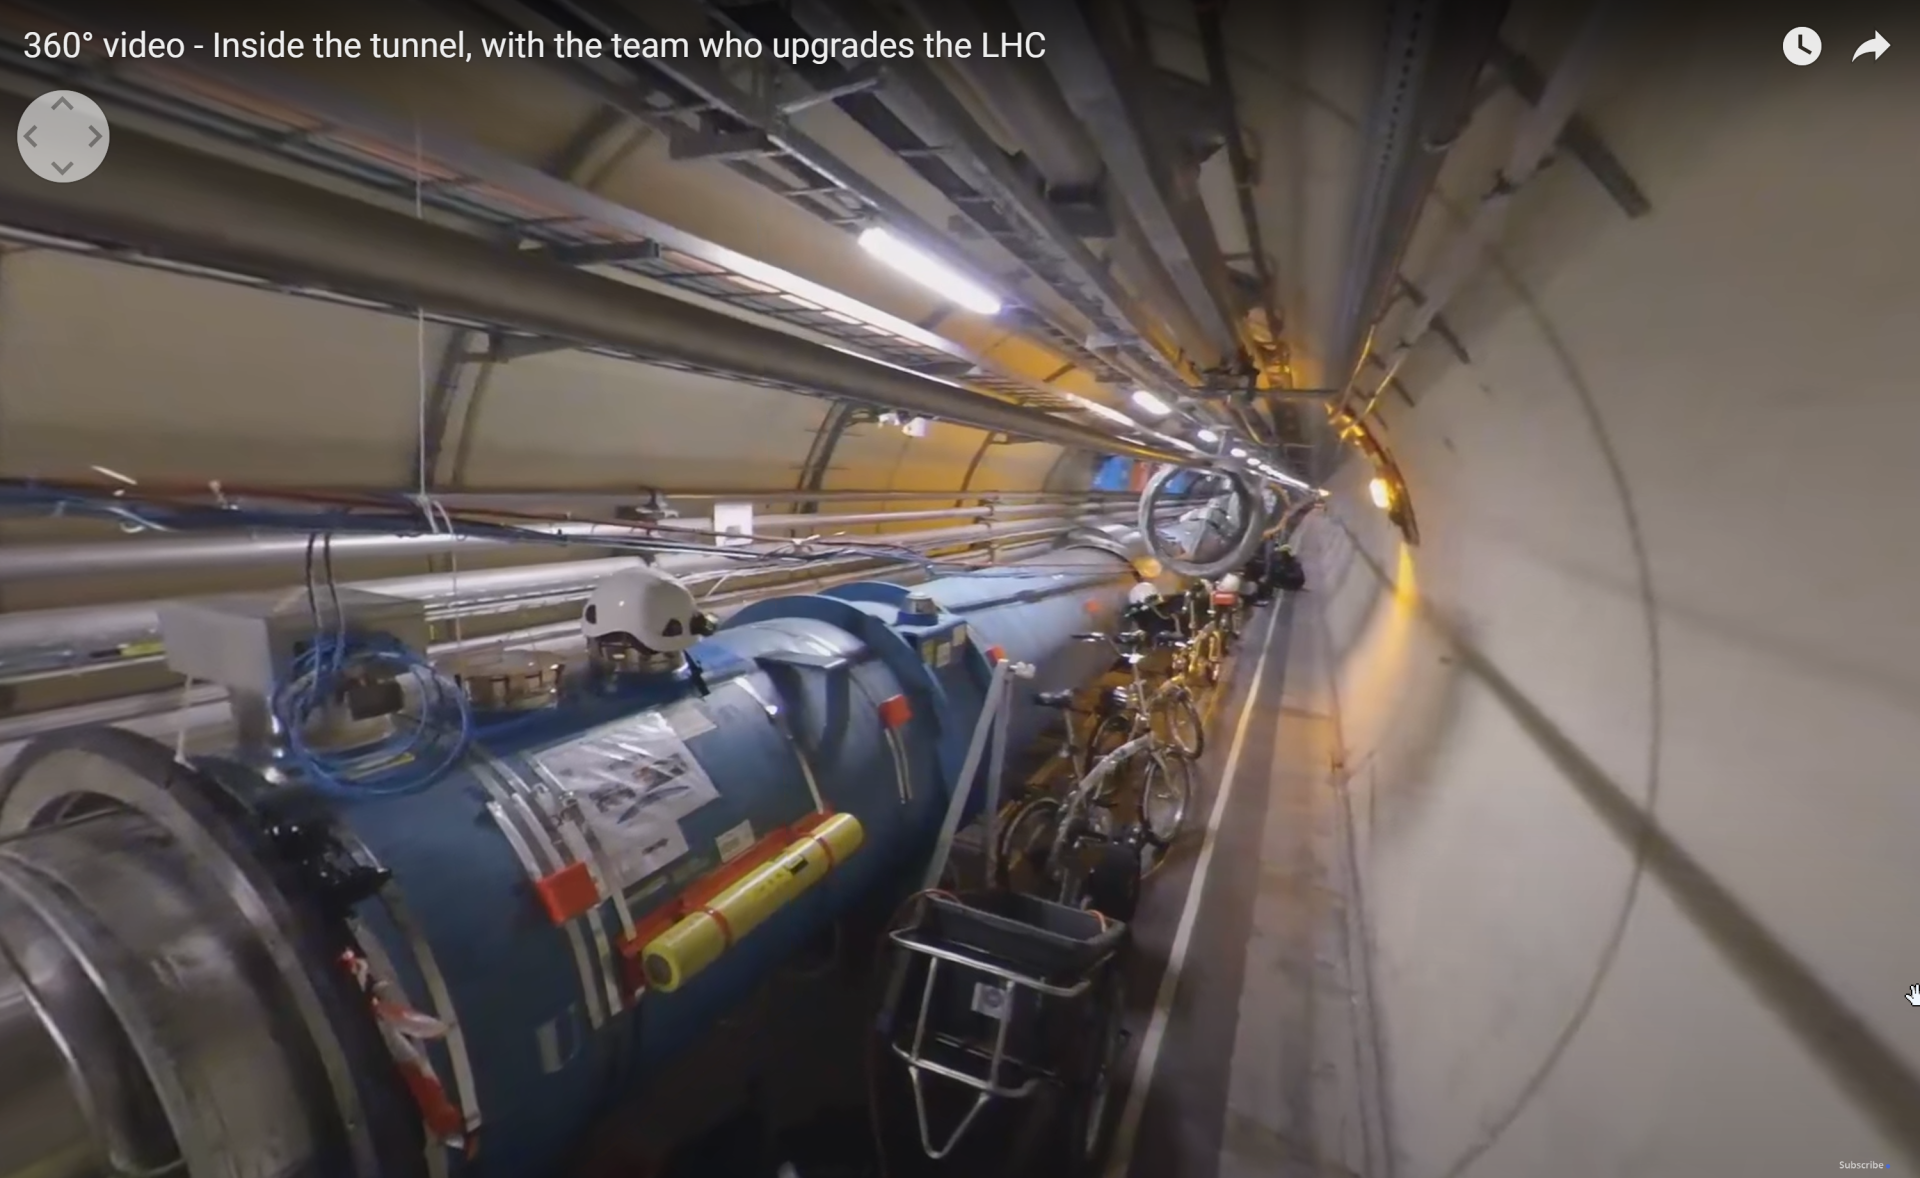 LHC upgrade in 360°